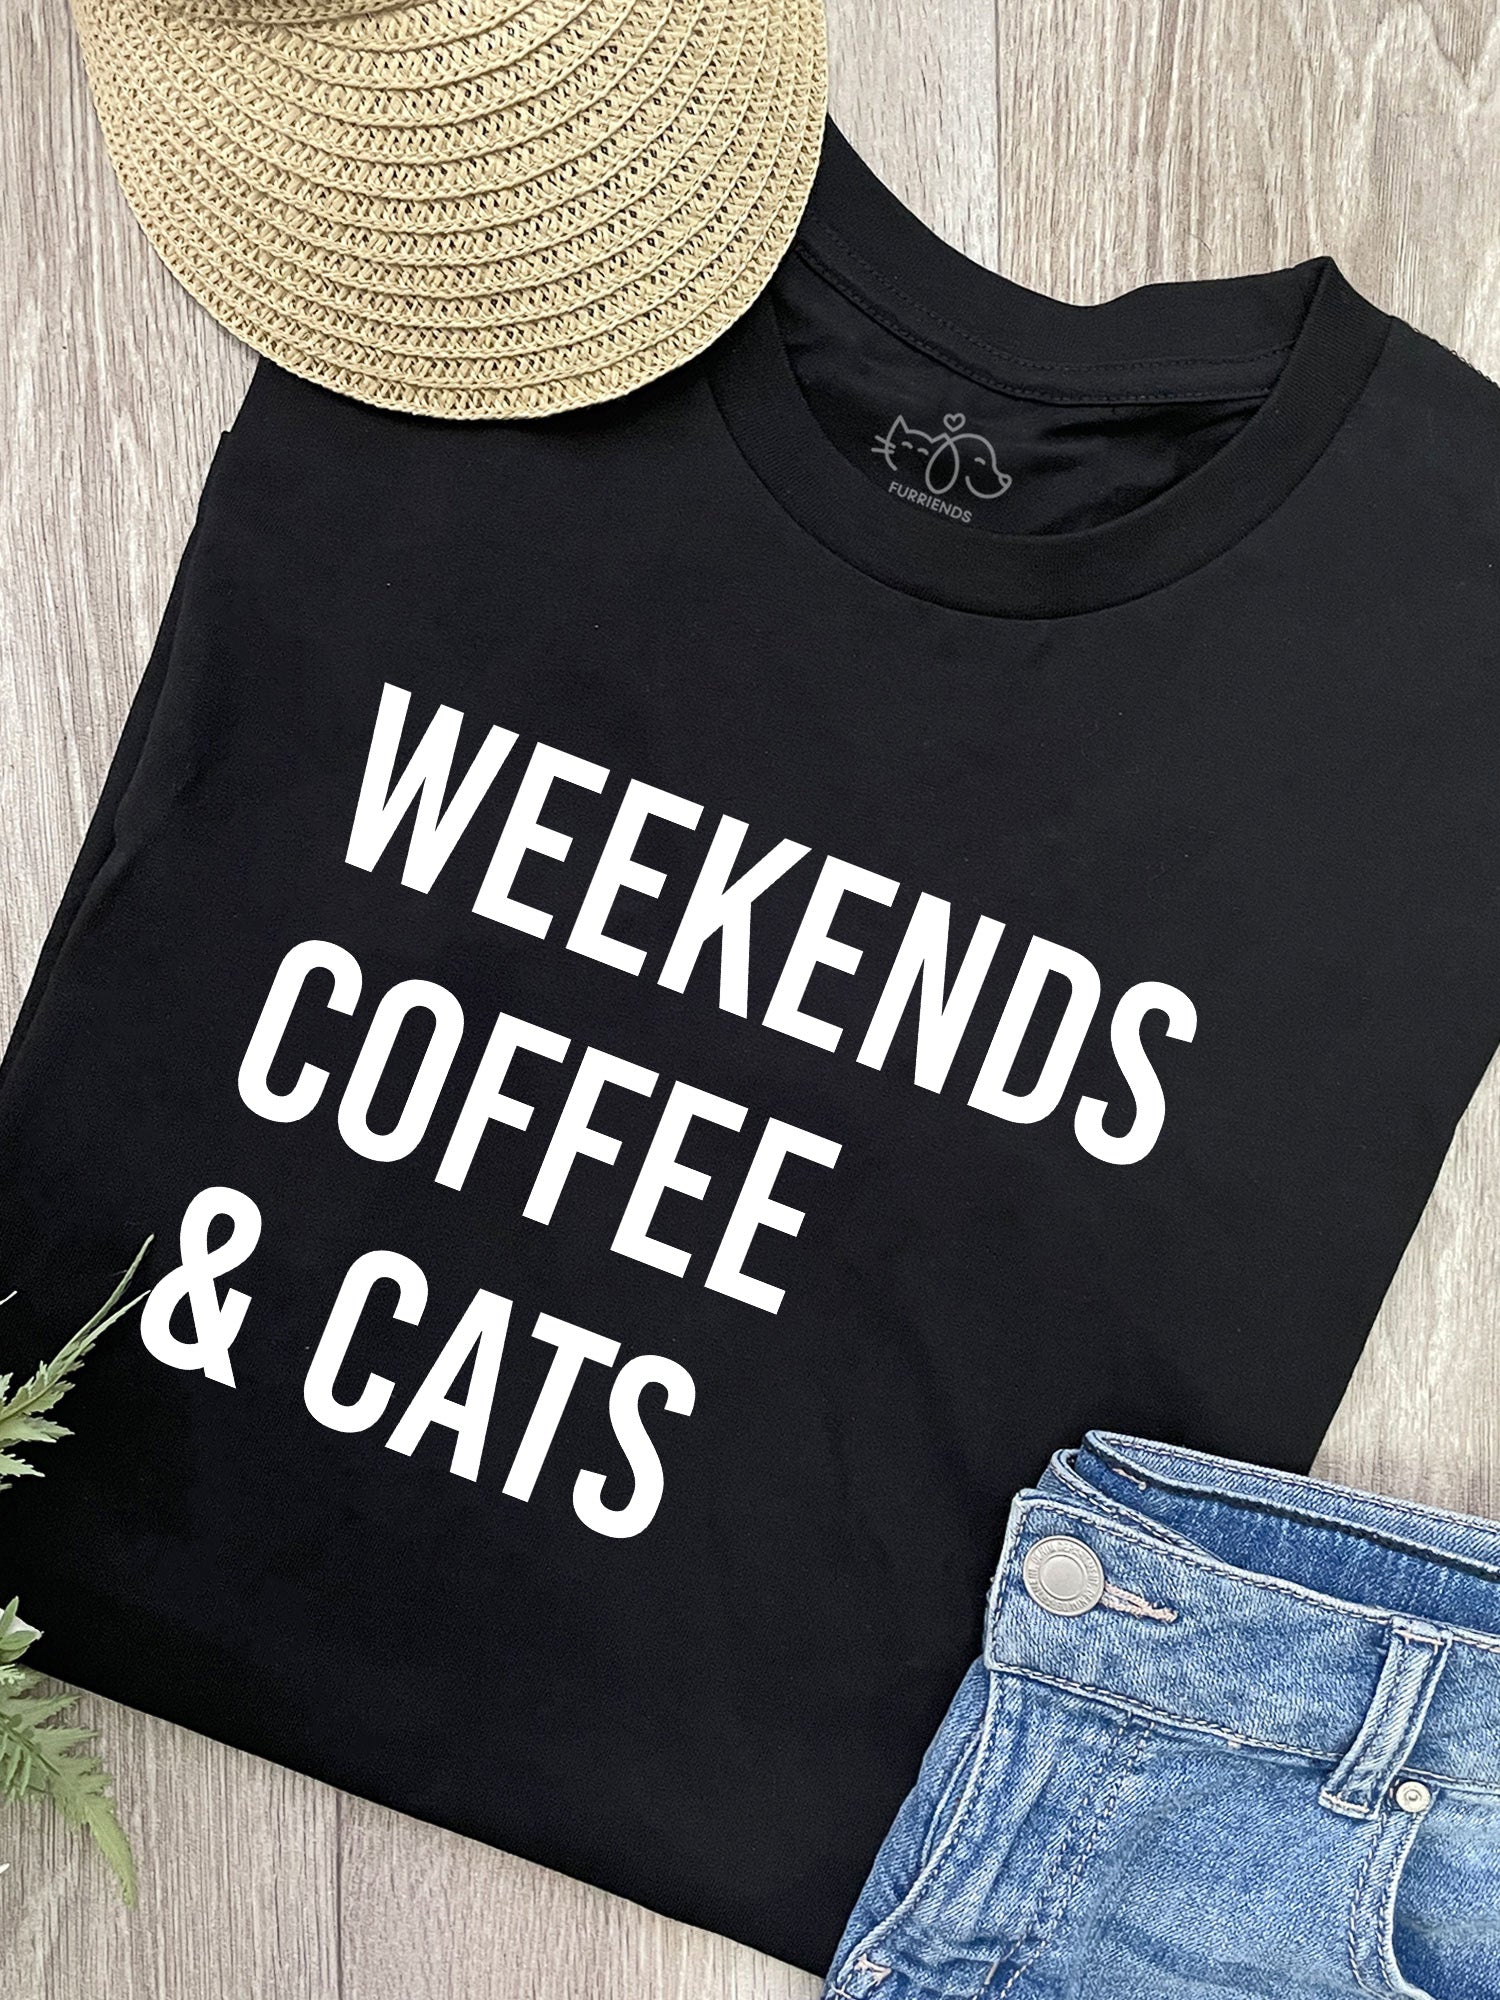 Weekends, Coffee, Cats